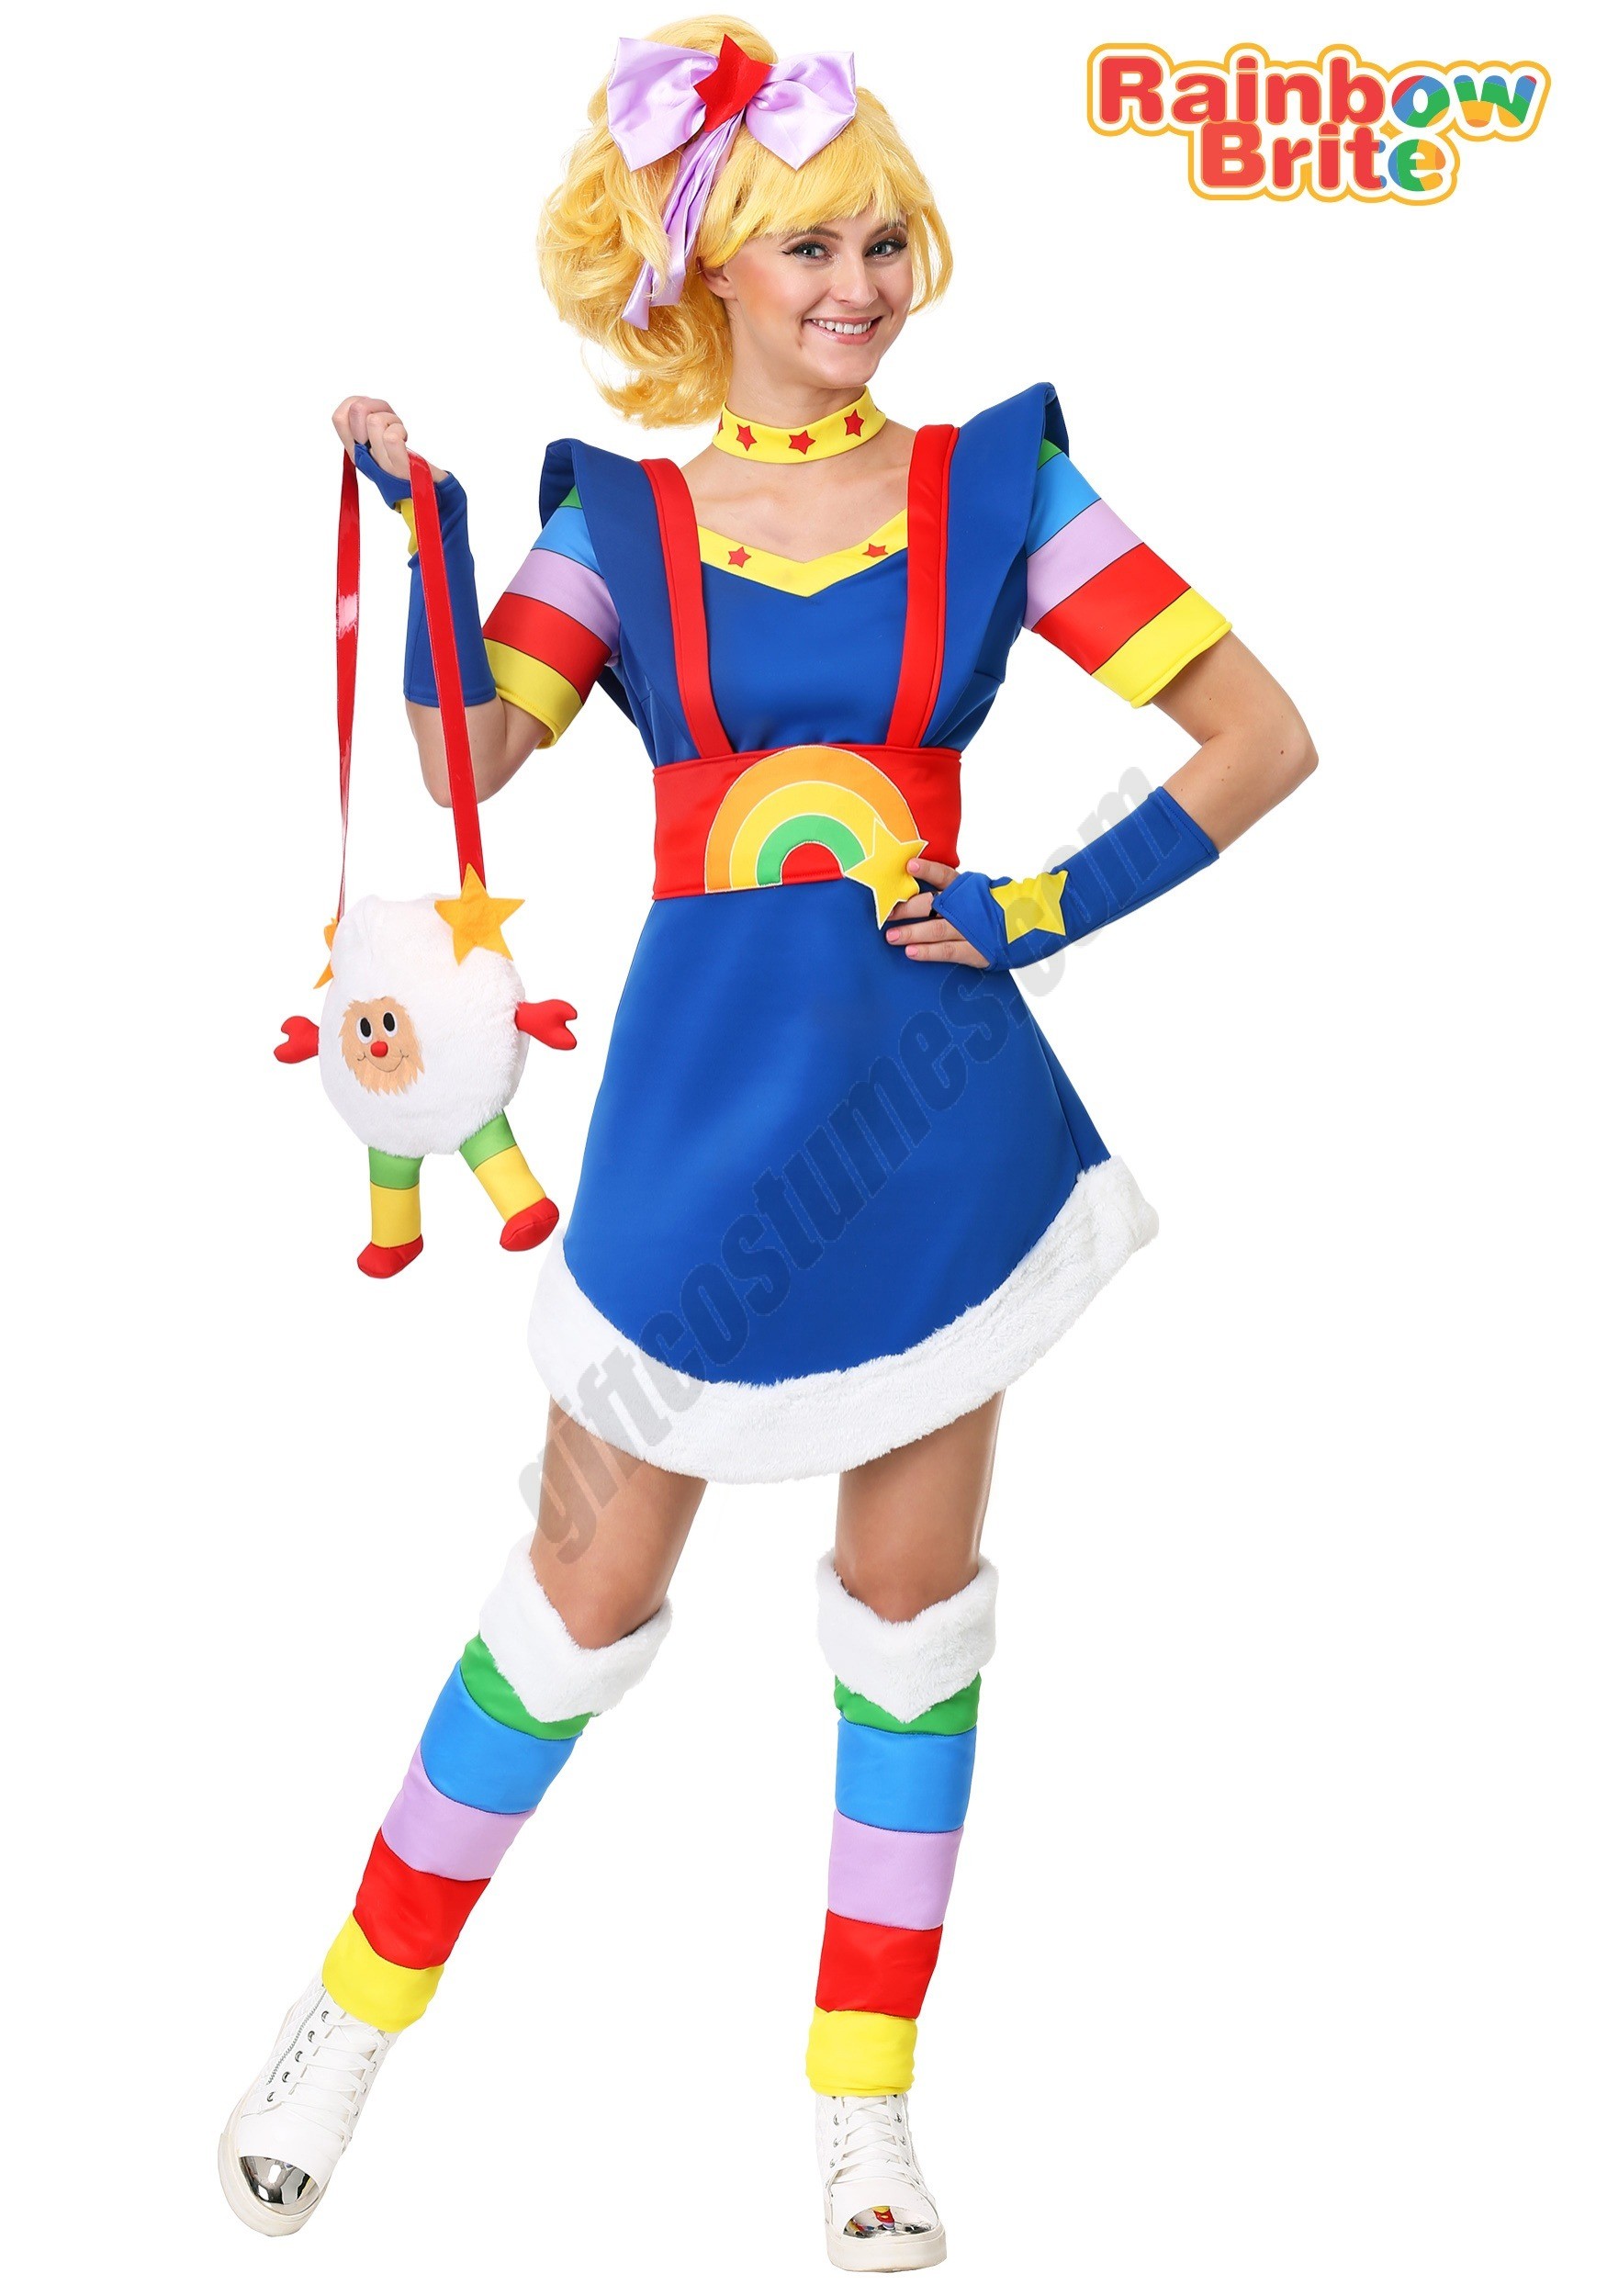 Rainbow Brite Adult Plus Size Costume Promotions - Rainbow Brite Adult Plus Size Costume Promotions